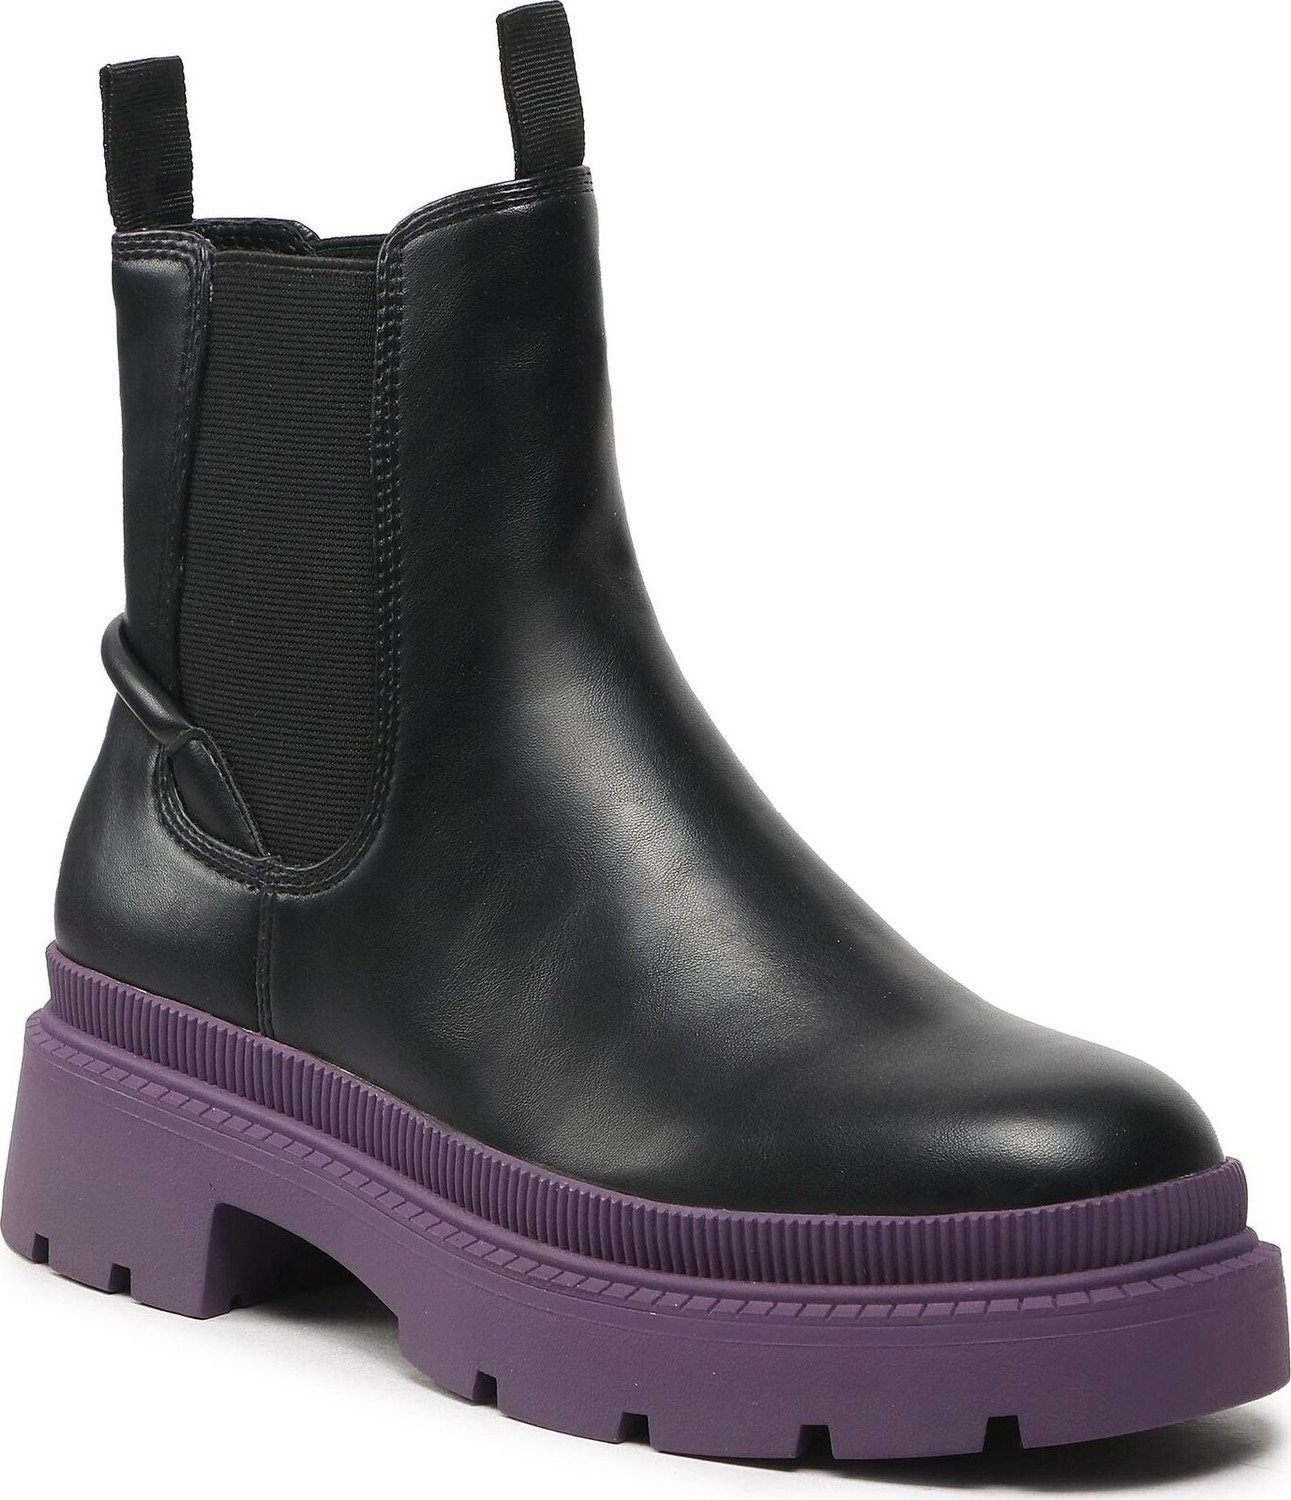 Kotníková obuv s elastickým prvkem Tamaris 1-25405-29 Black/Purple 058